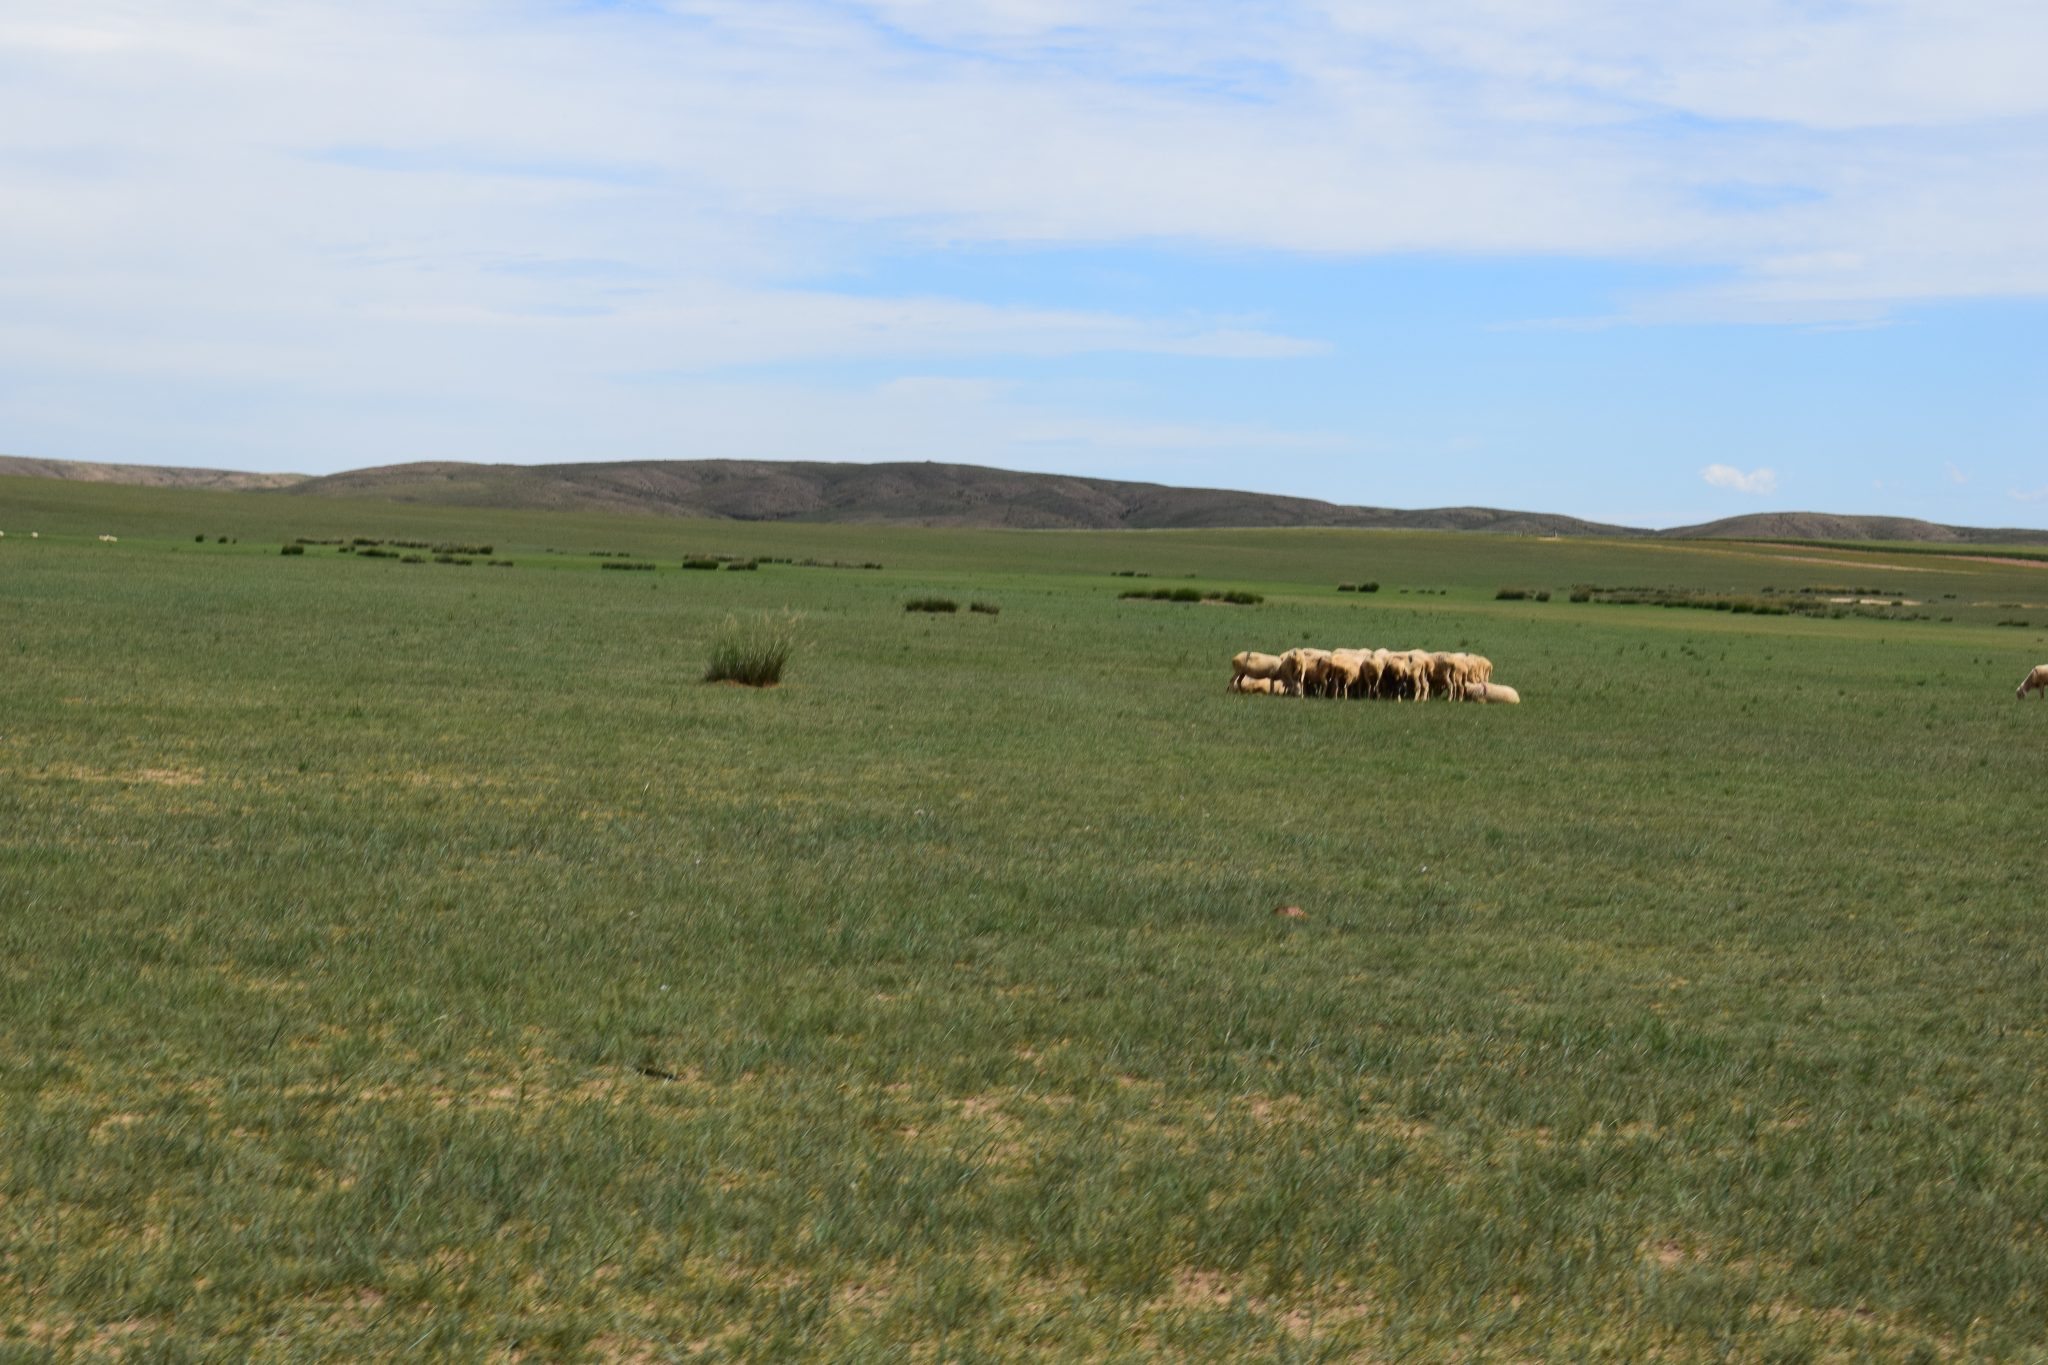 Day #8: Deep in the Mongolian grasslands